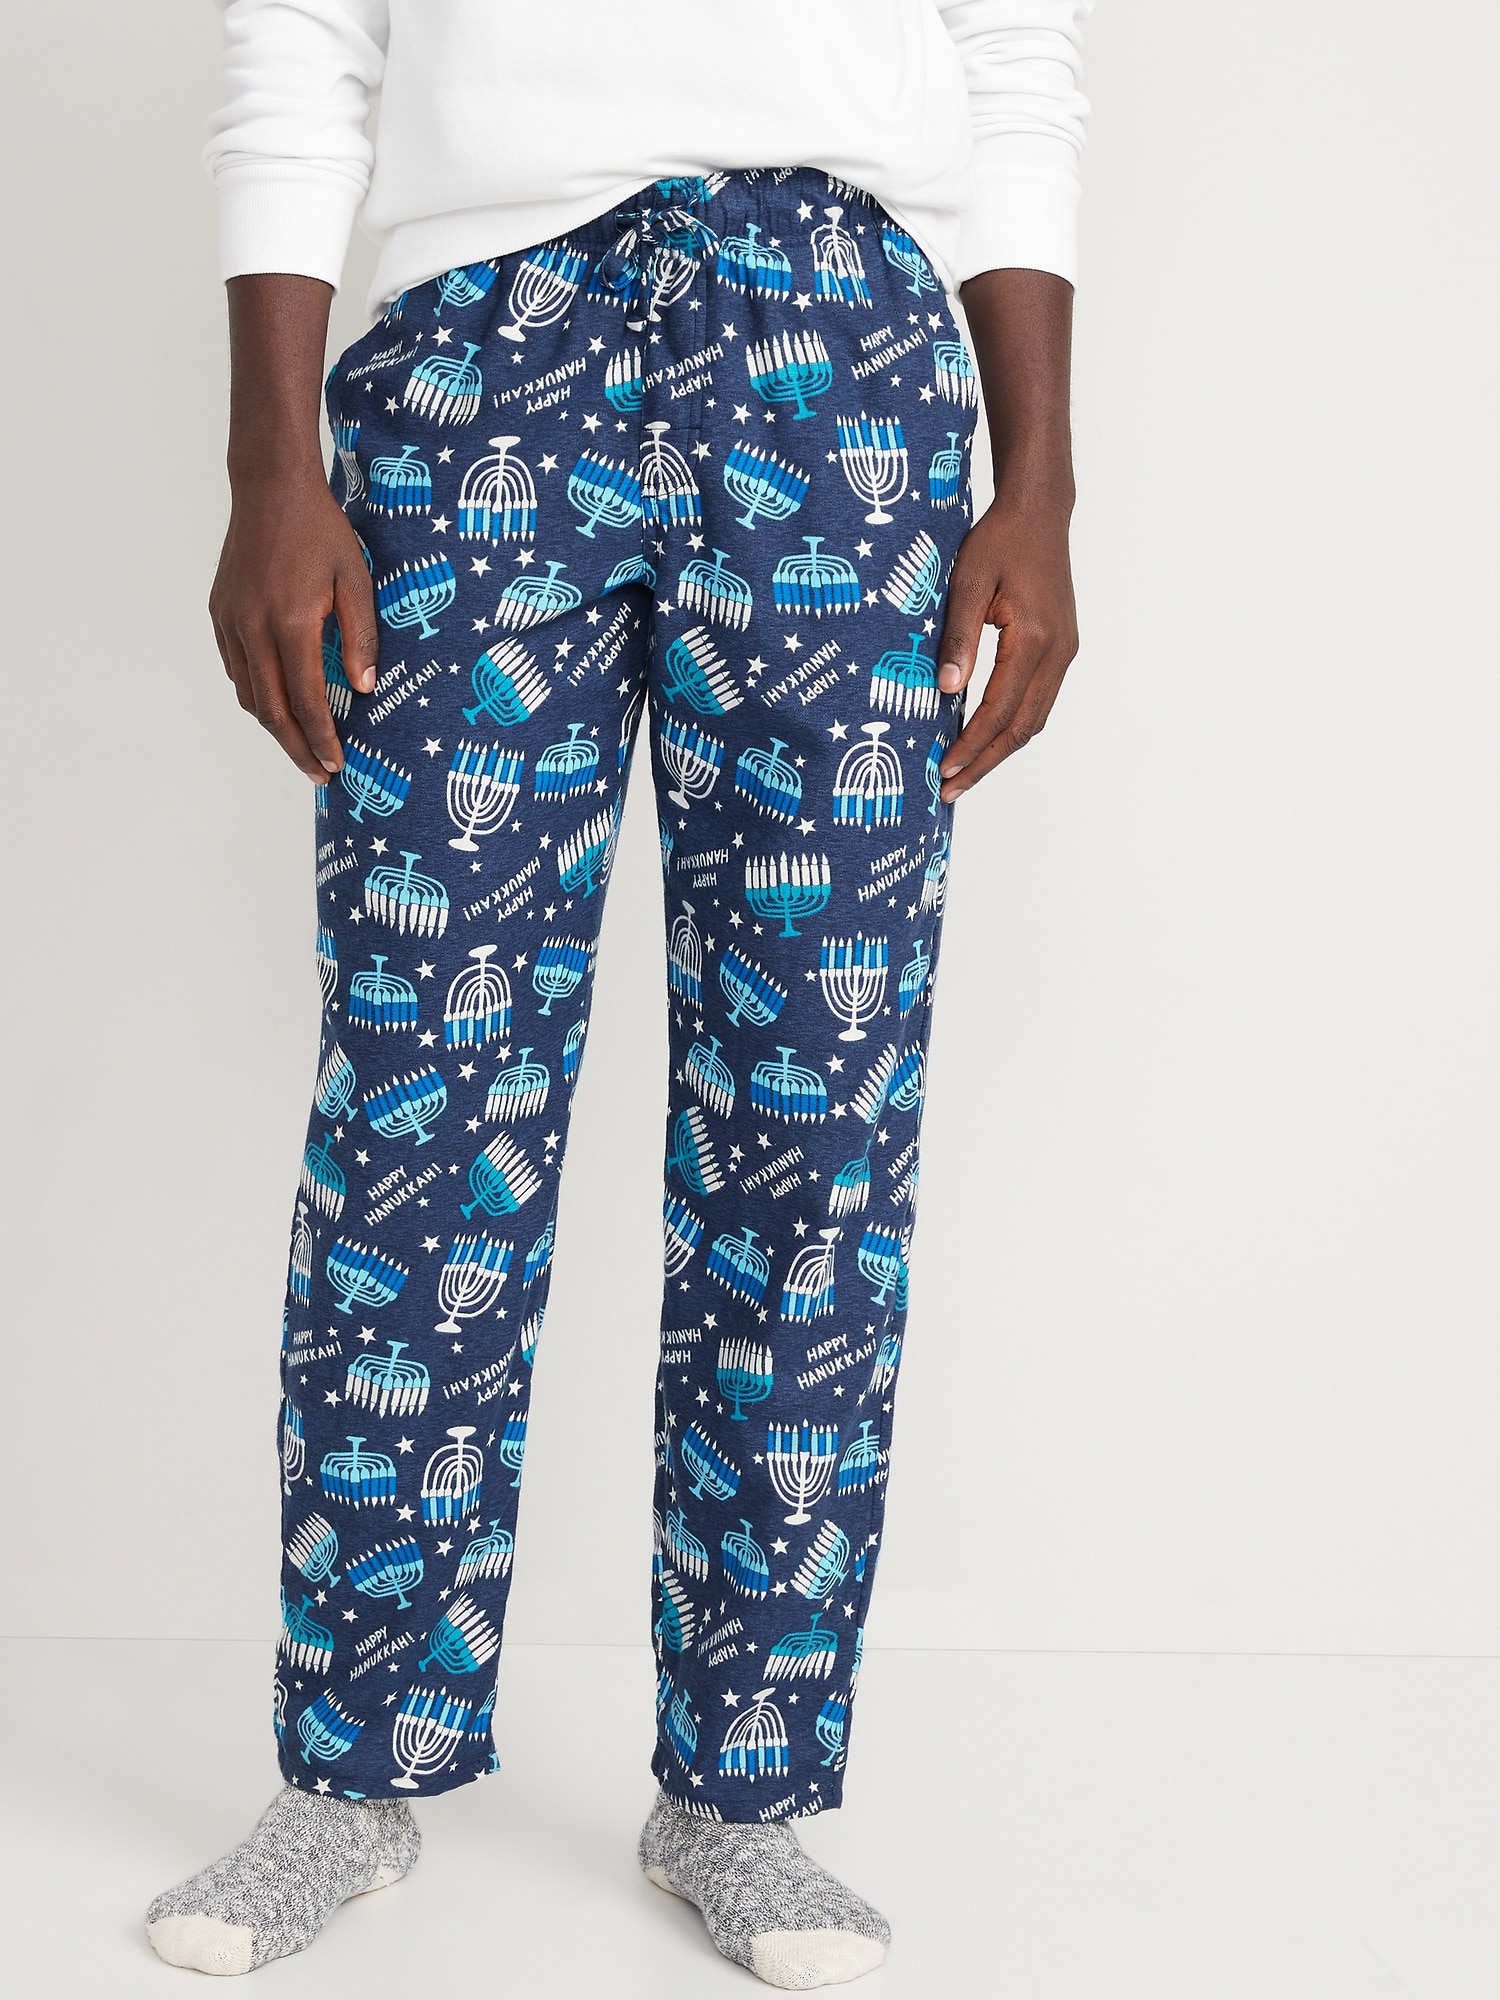 Old Navy Printed Flannel Pajama Pants Men's Christmas Sz Medium M